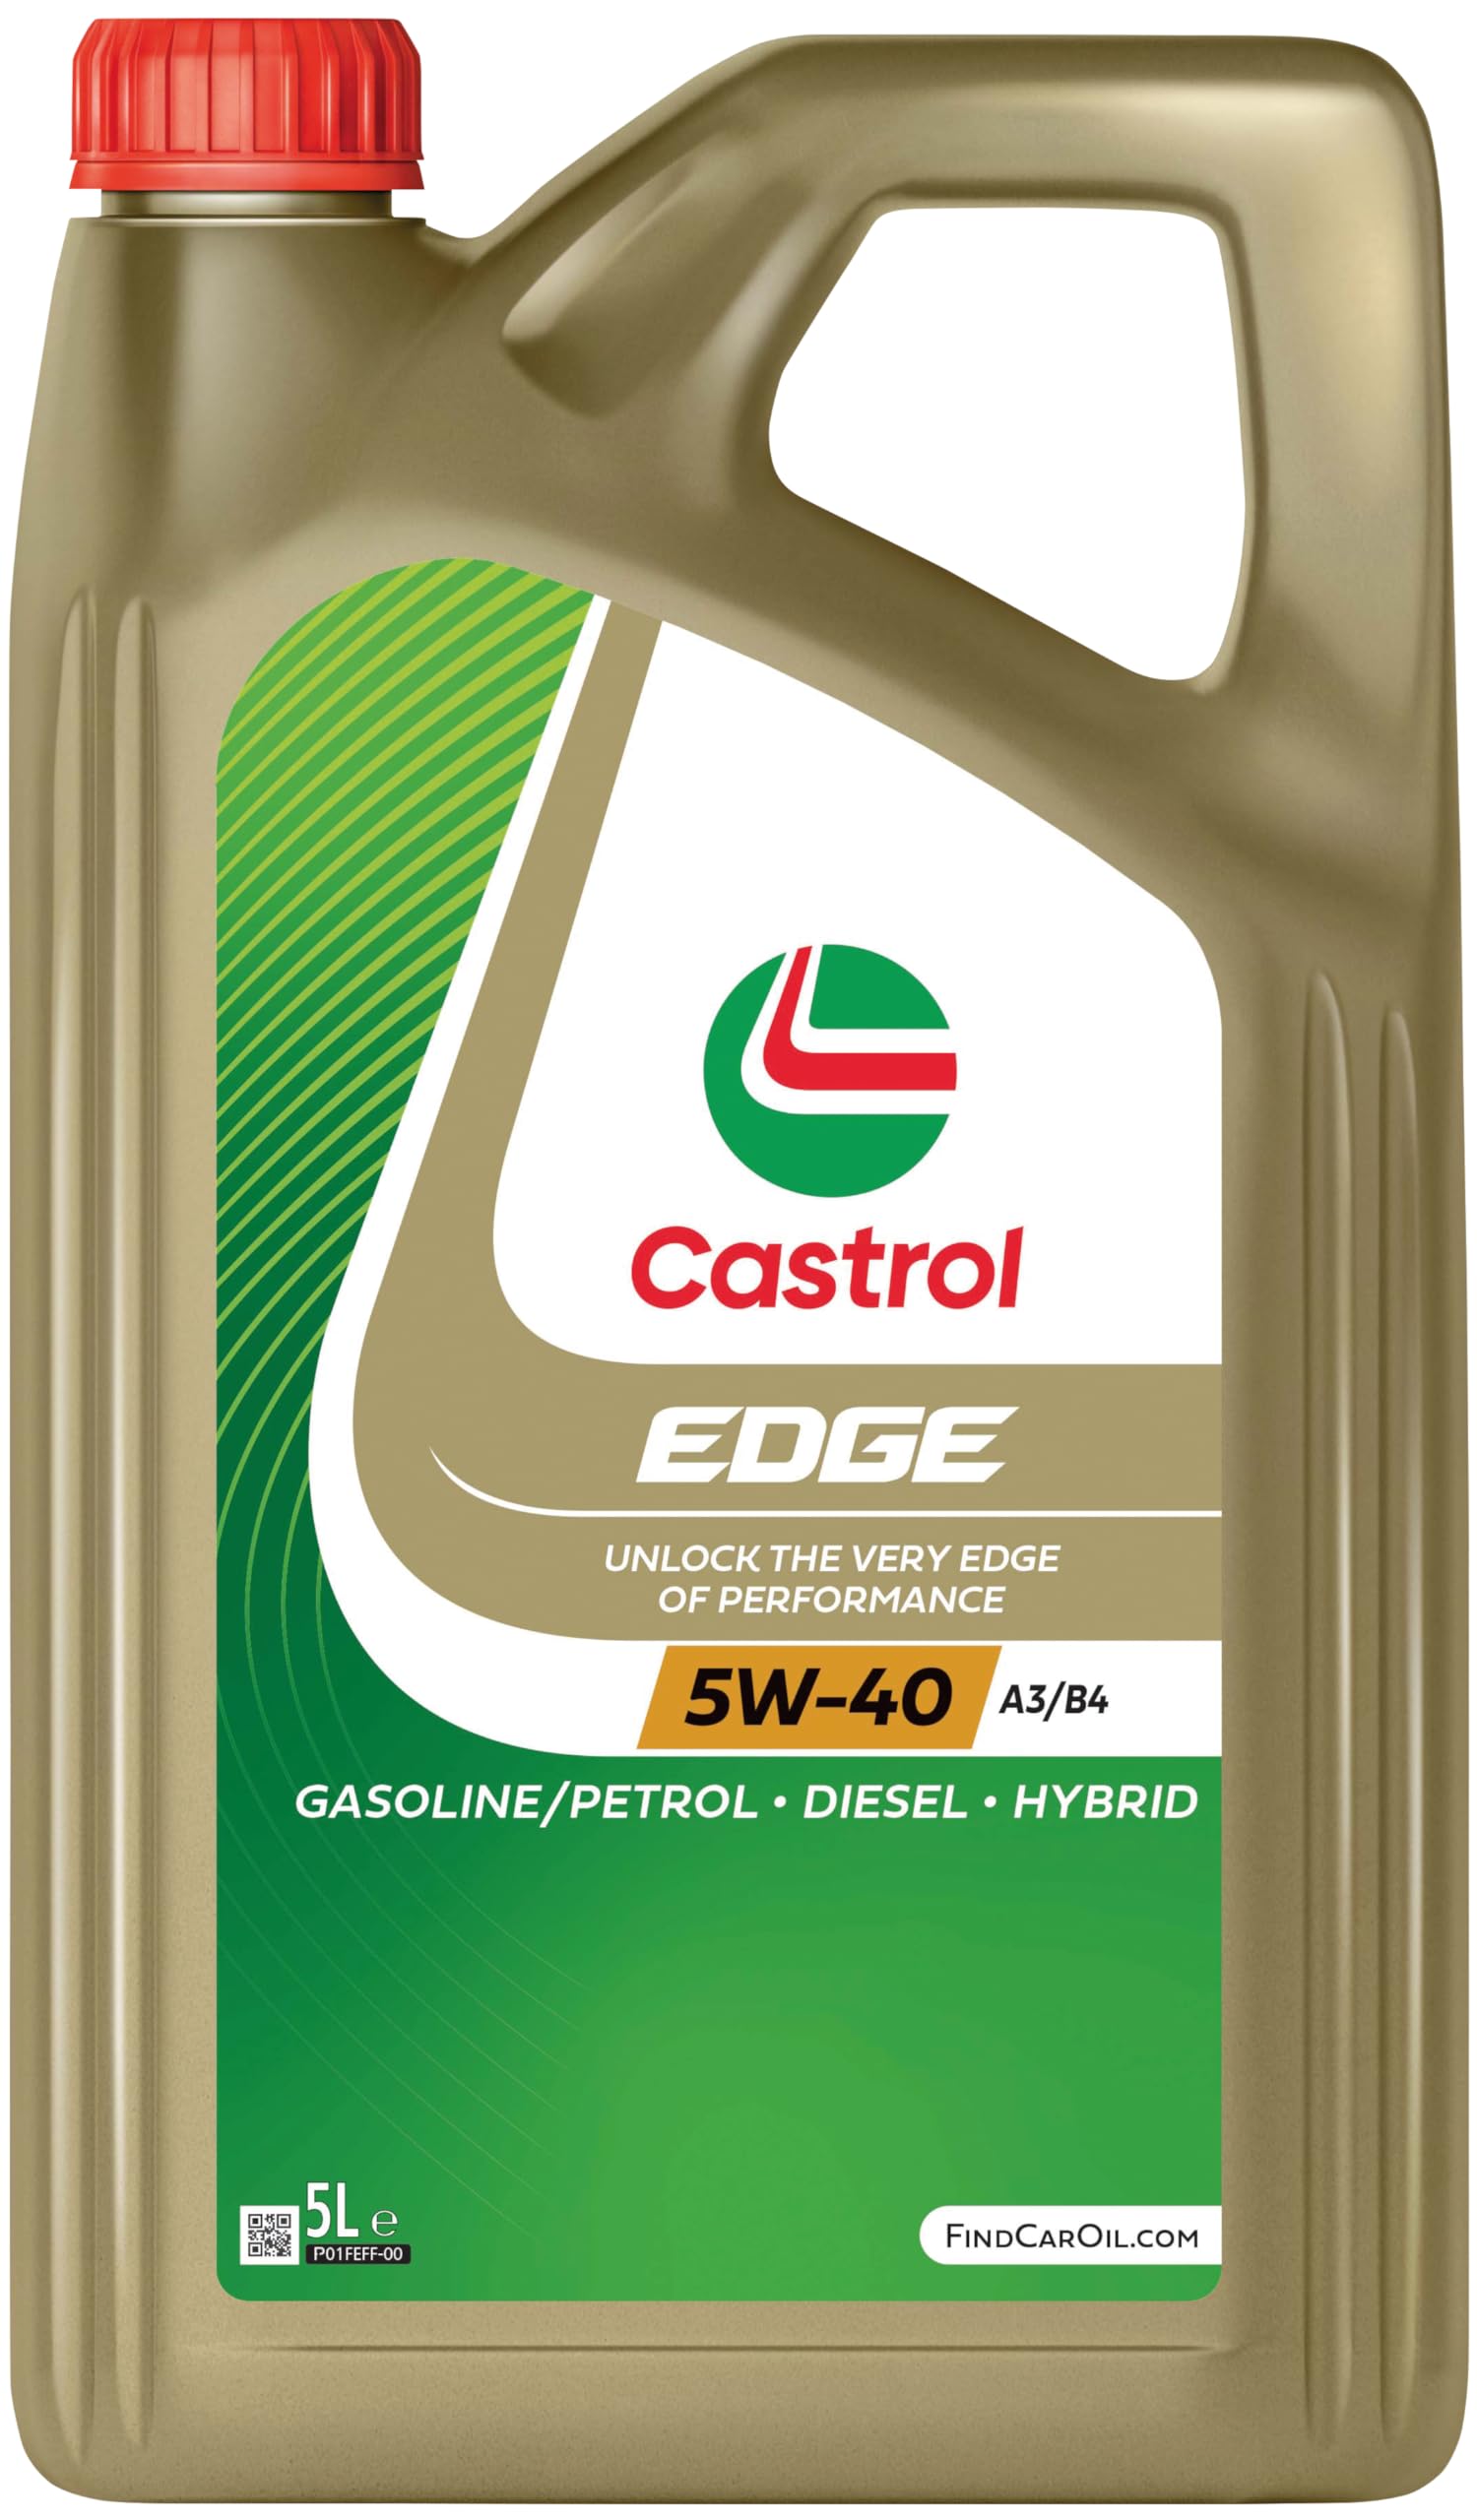 Castrol EDGE 5W-40 A3/B4 Motoröl, 5L von Castrol